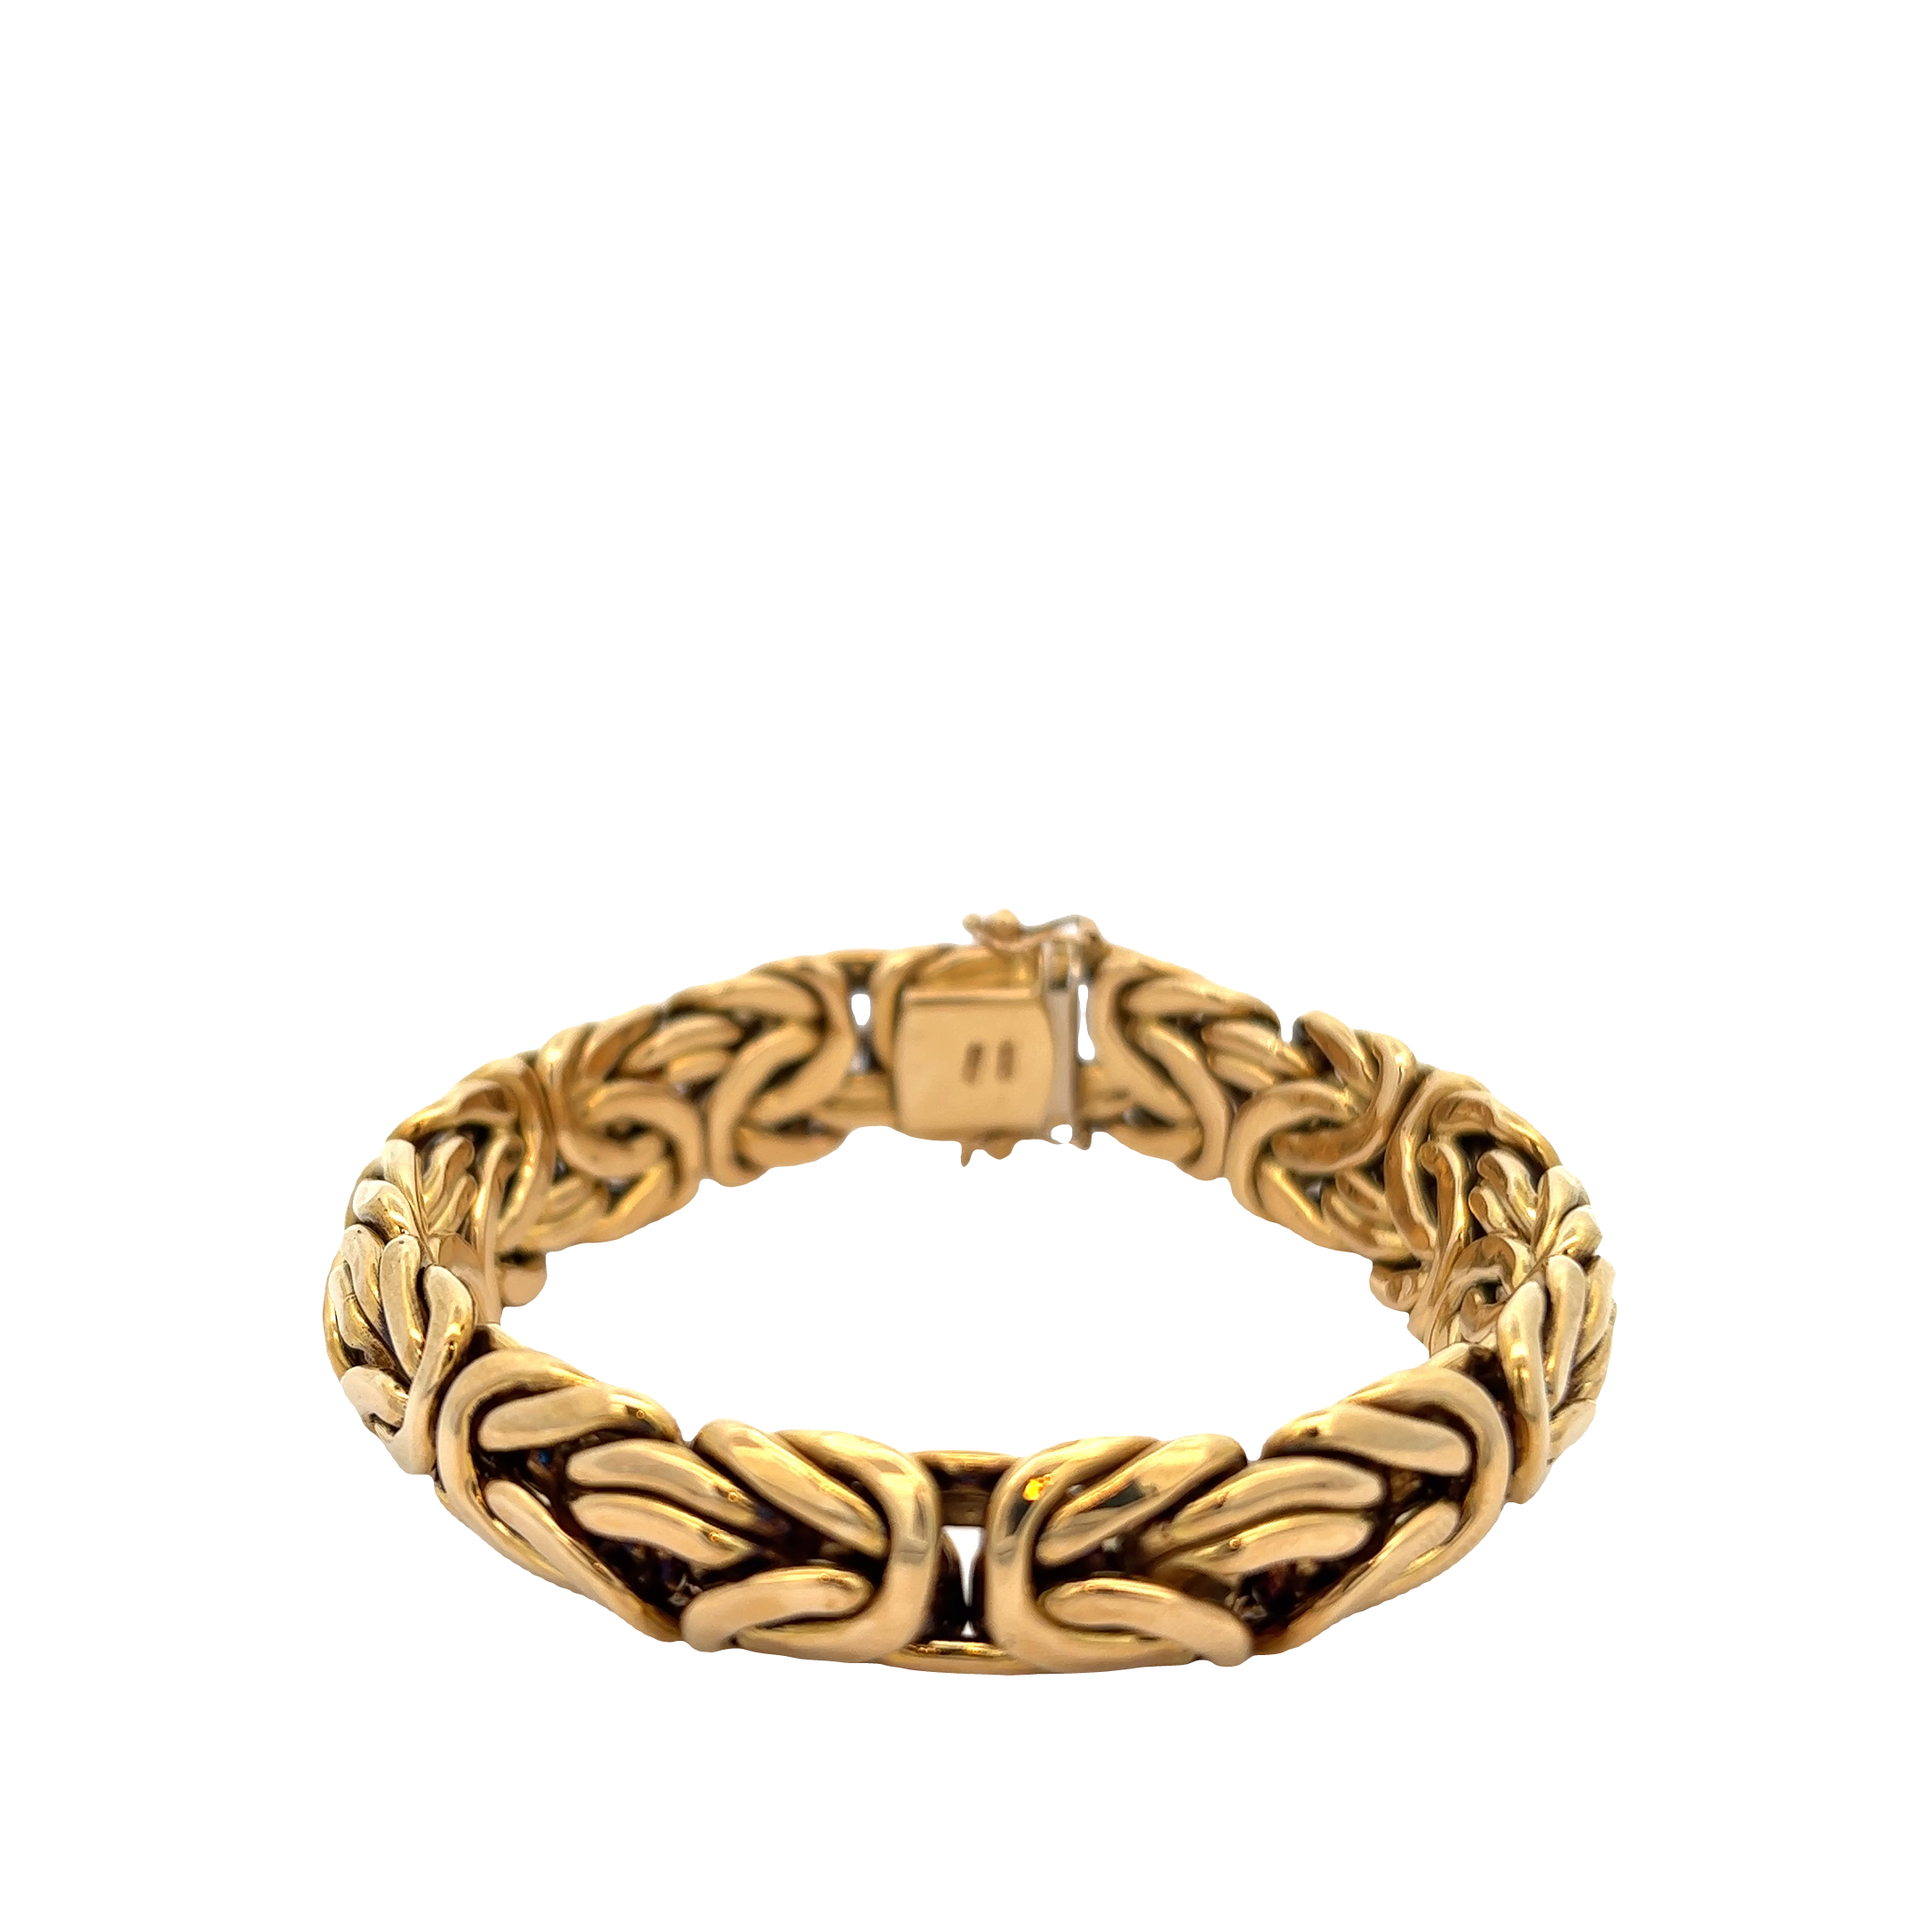 Vintage 1970s Italian Made 14KT Yellow Gold Byzantine Link Bracelet